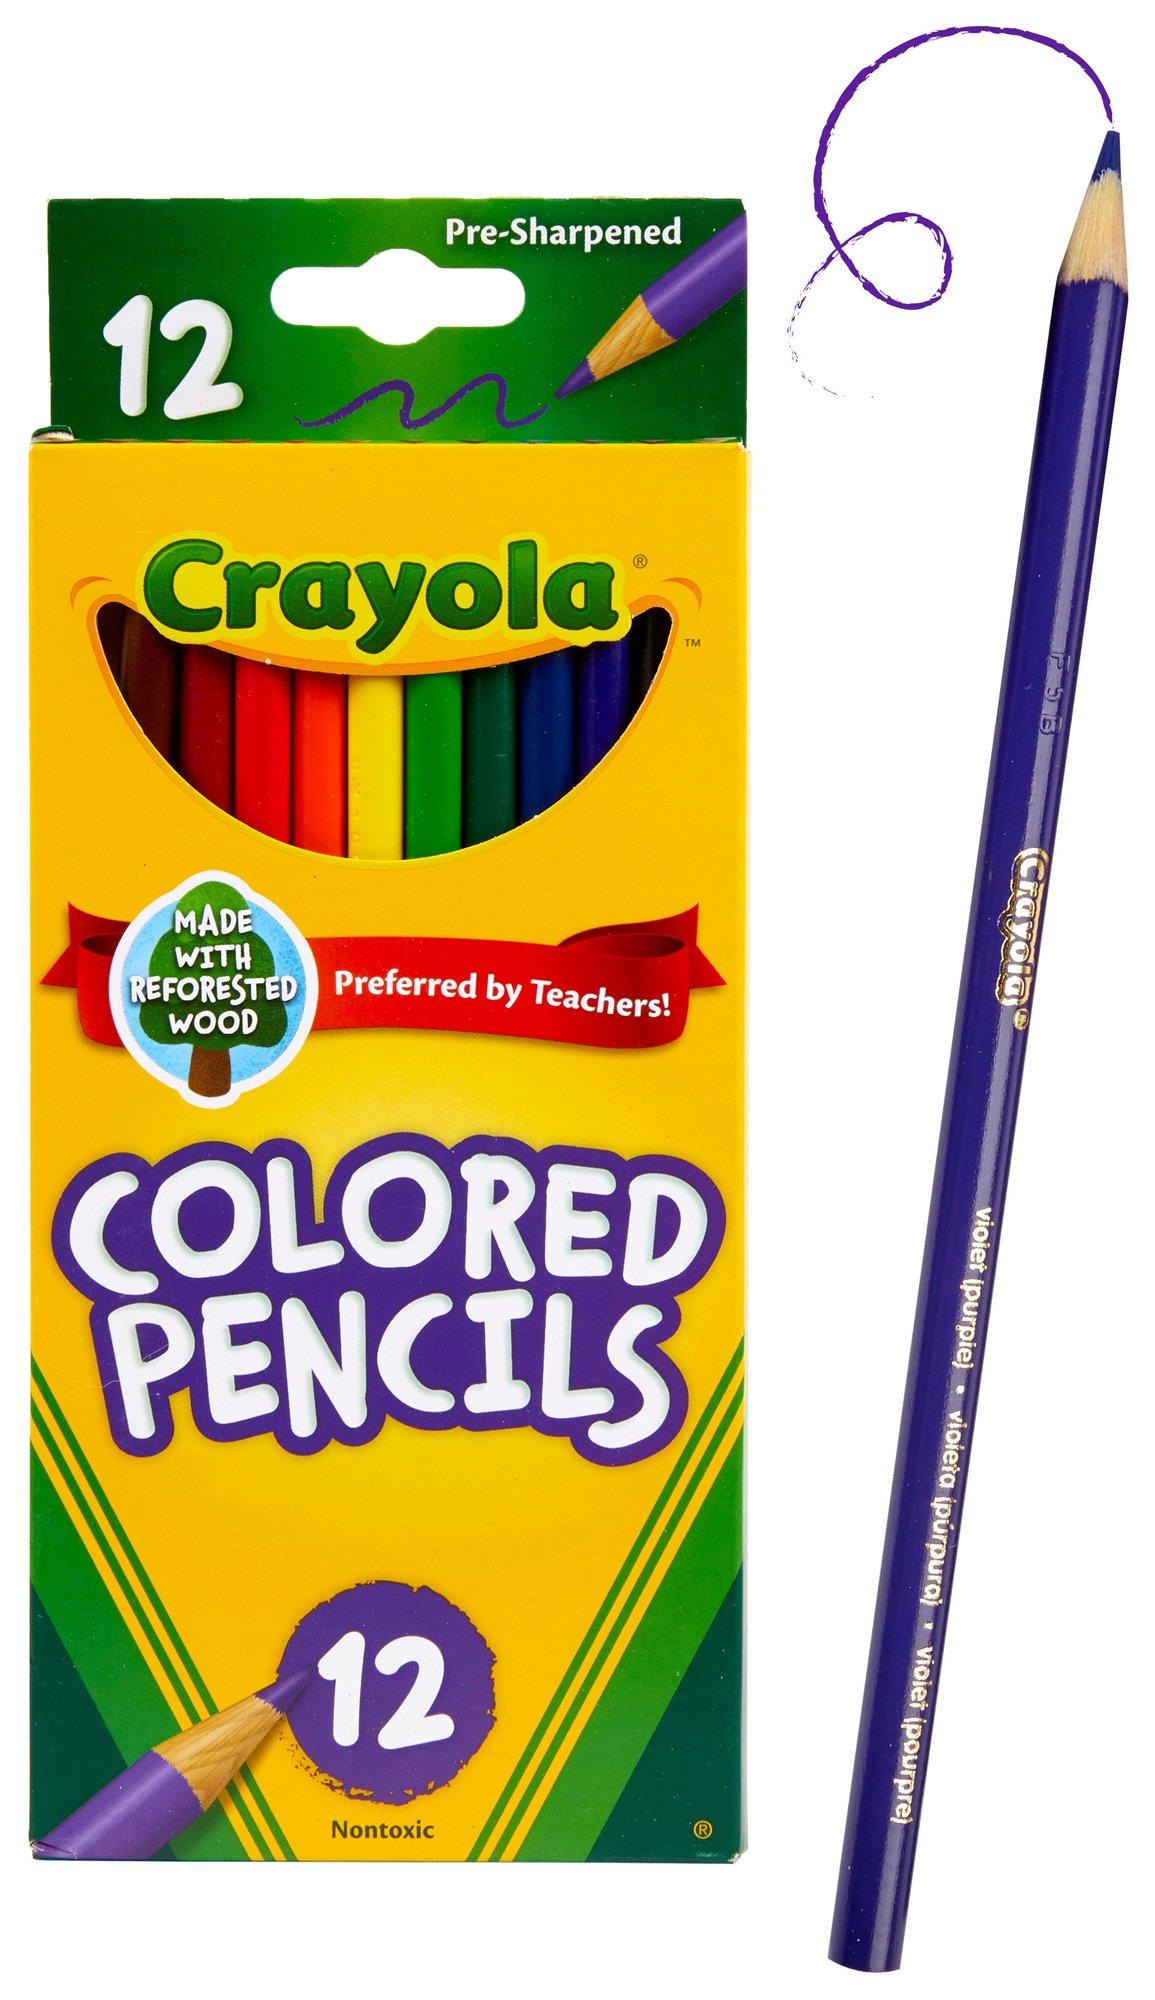 12 Count Nontoxic Colored Pencils